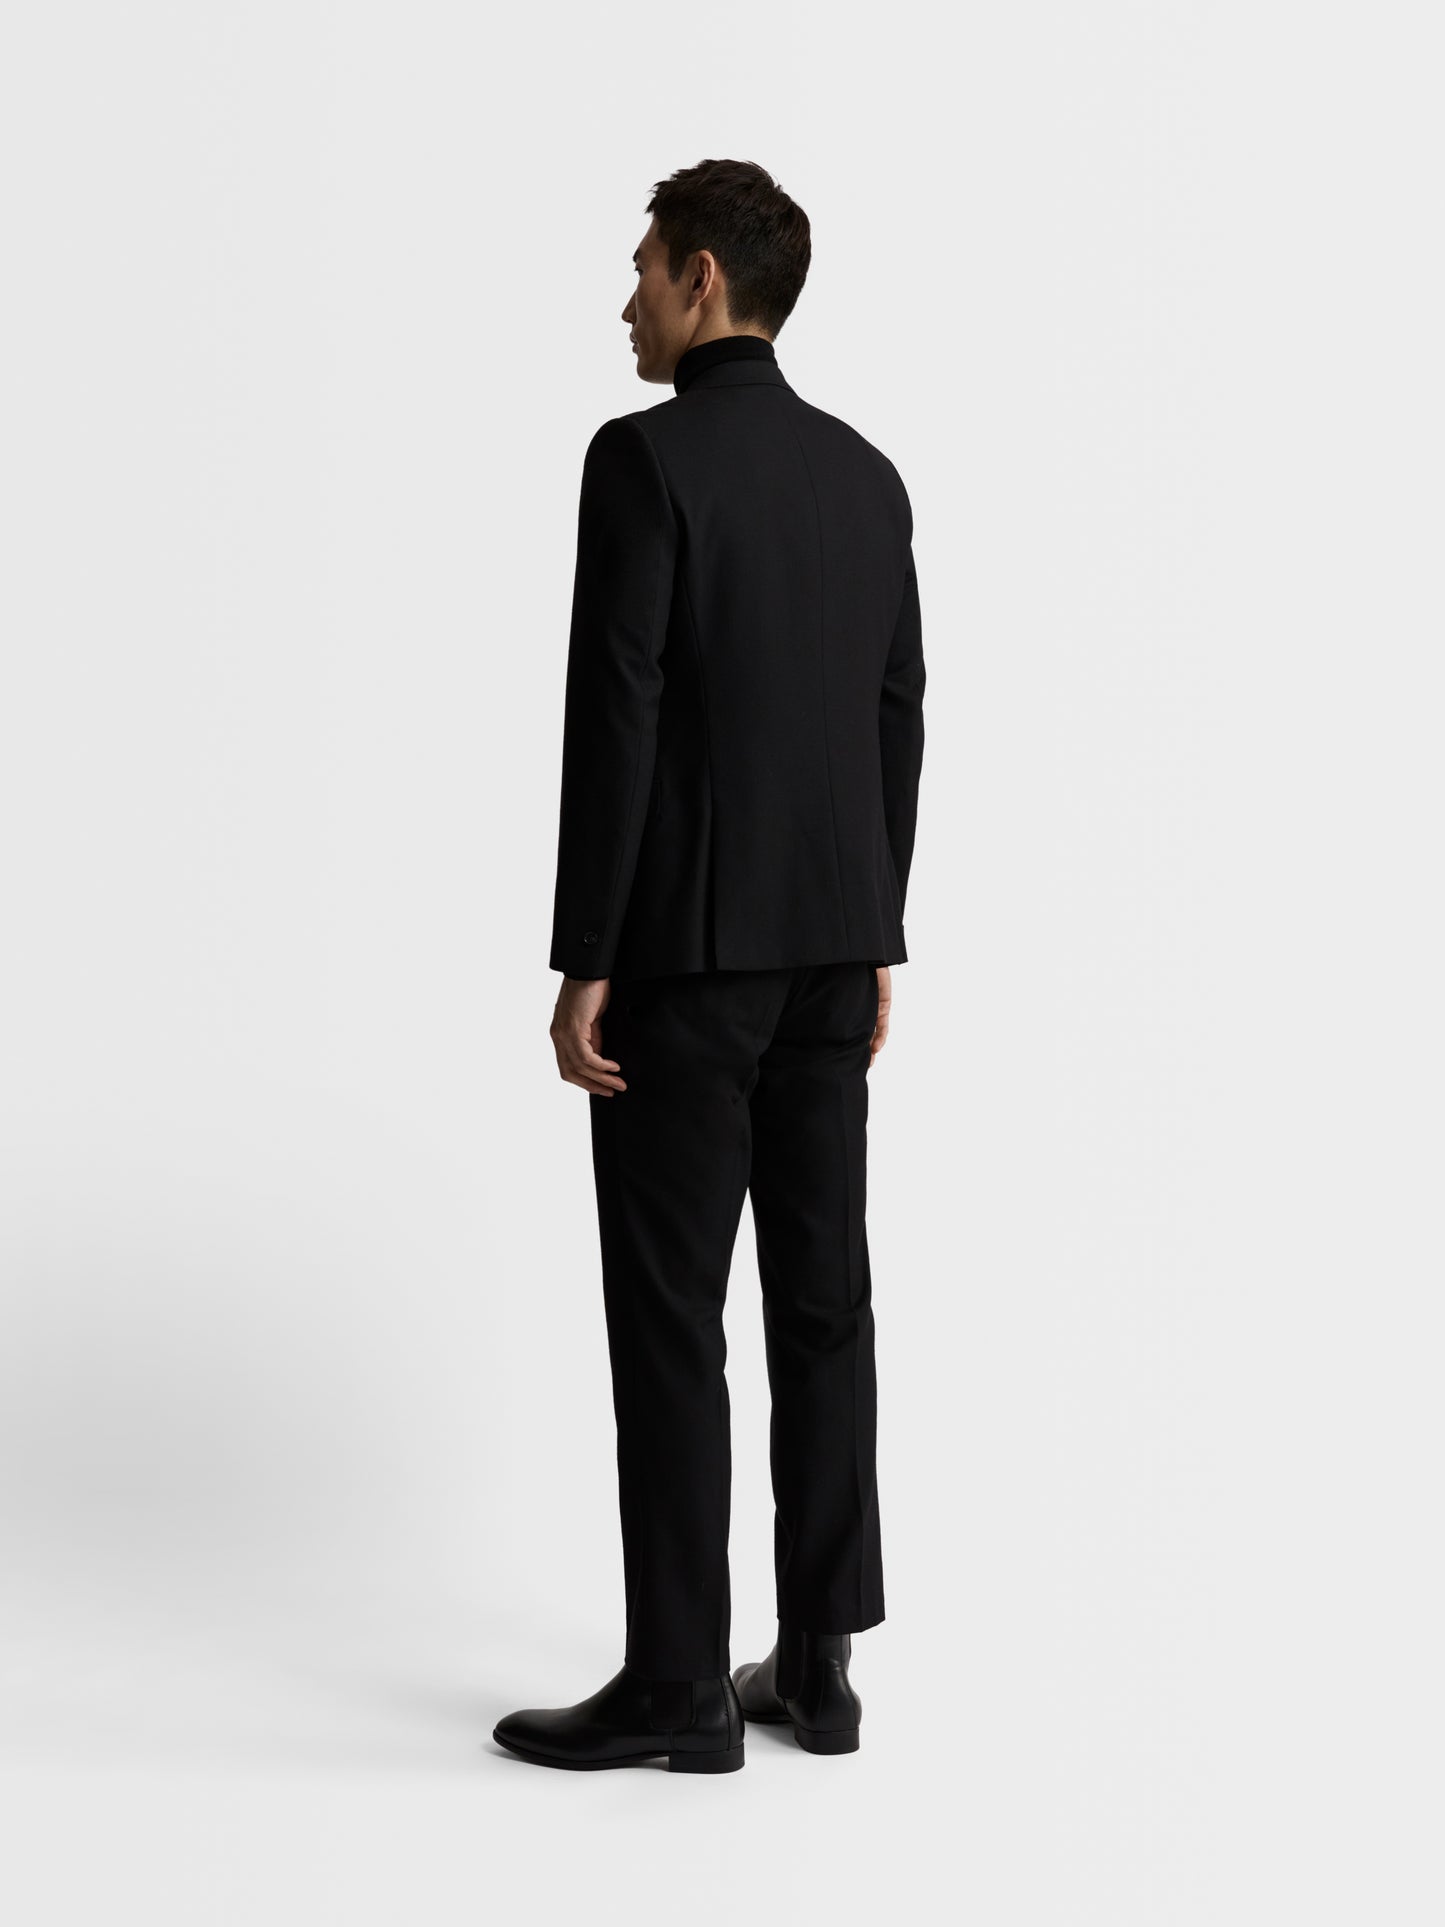 Image 4 of Idol Skinny Fit Plain Black Suit Jacket